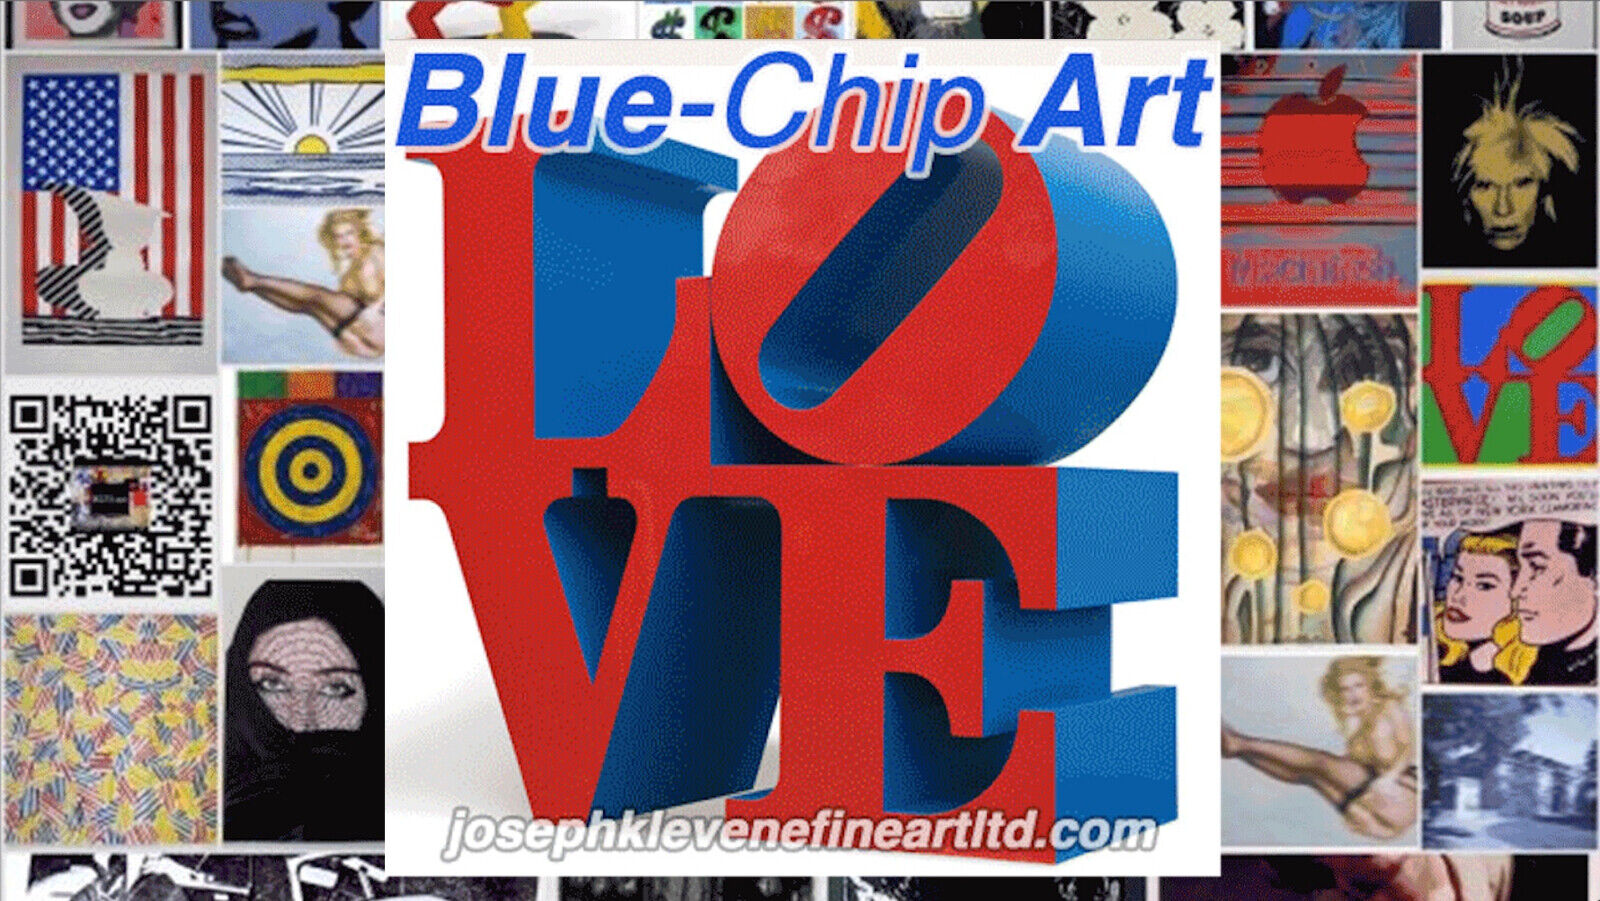 View Blue-Chip Art